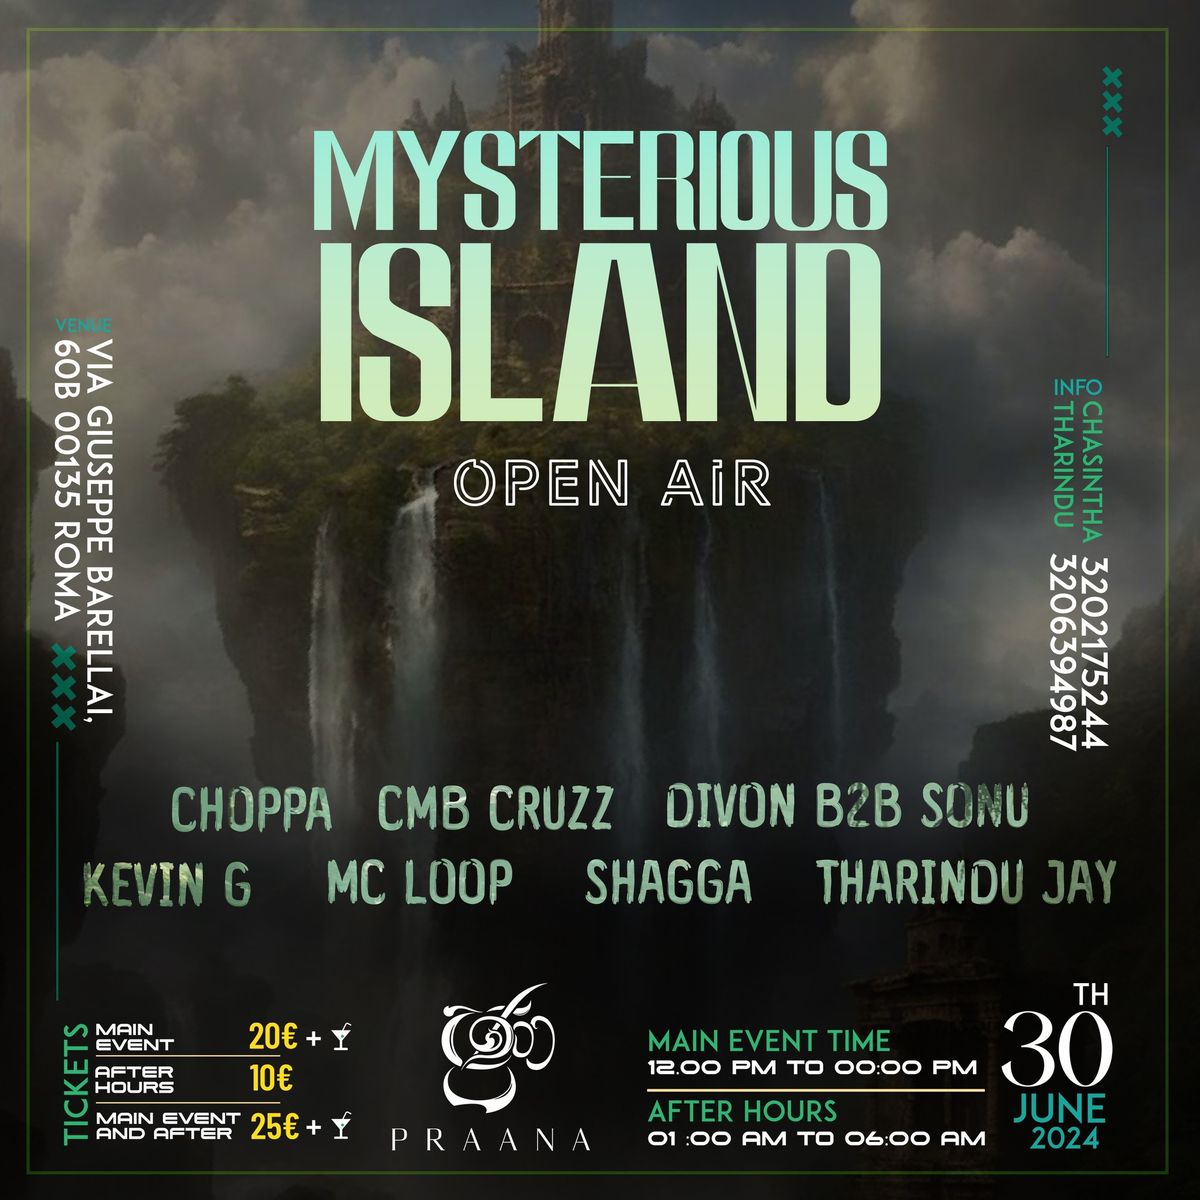 Mysterious island